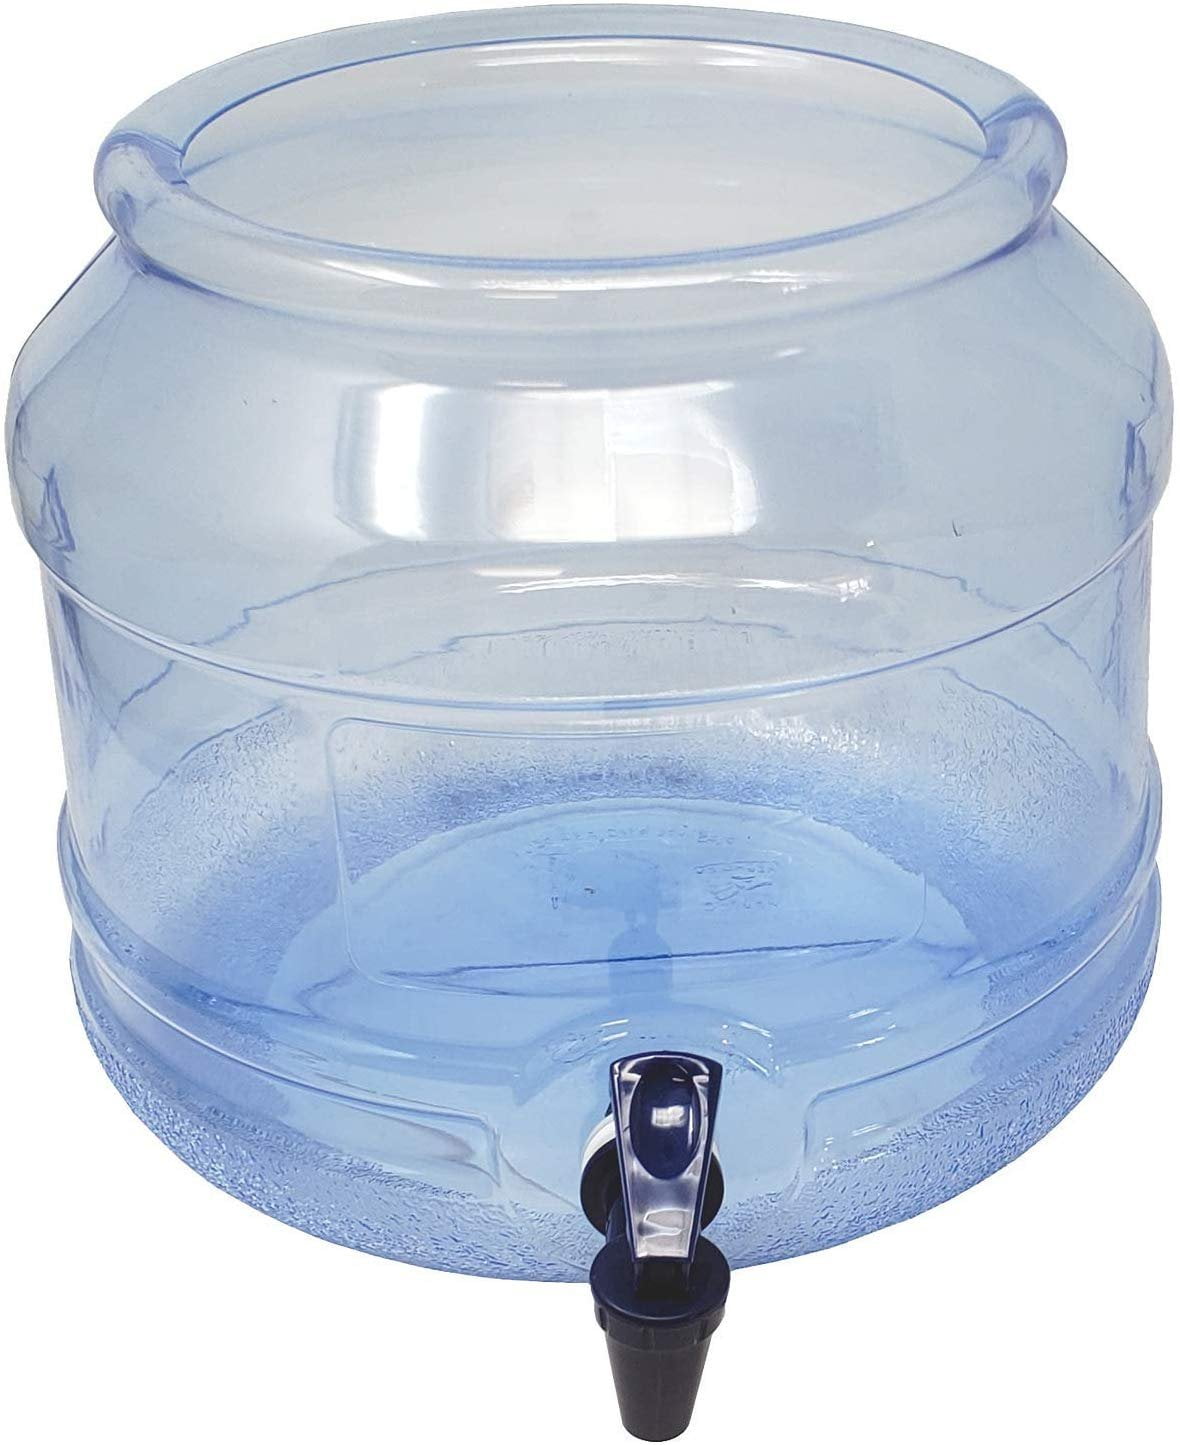 LavoHome 5 Gal. Vitrolero Aguas Frescas Tapadera Plastic Water